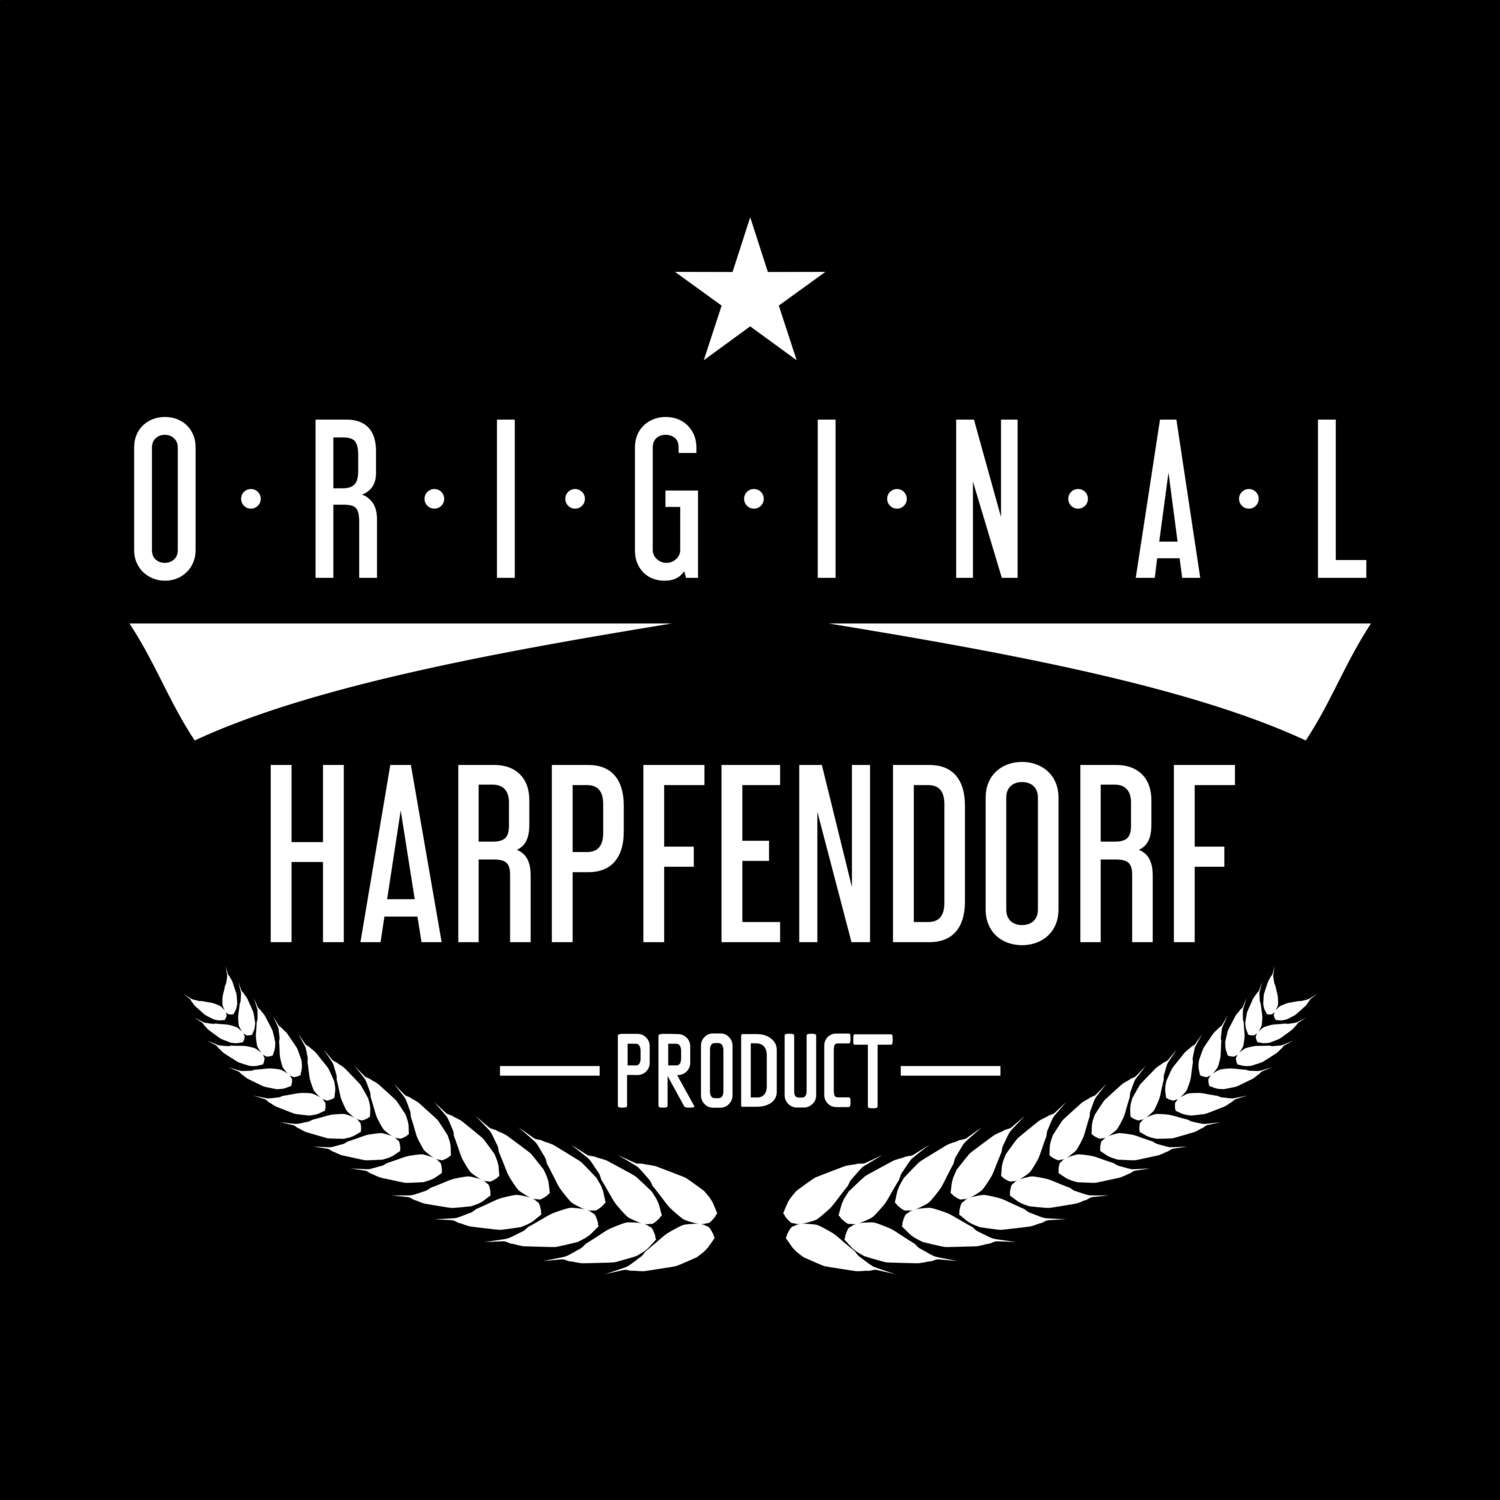 Harpfendorf T-Shirt »Original Product«